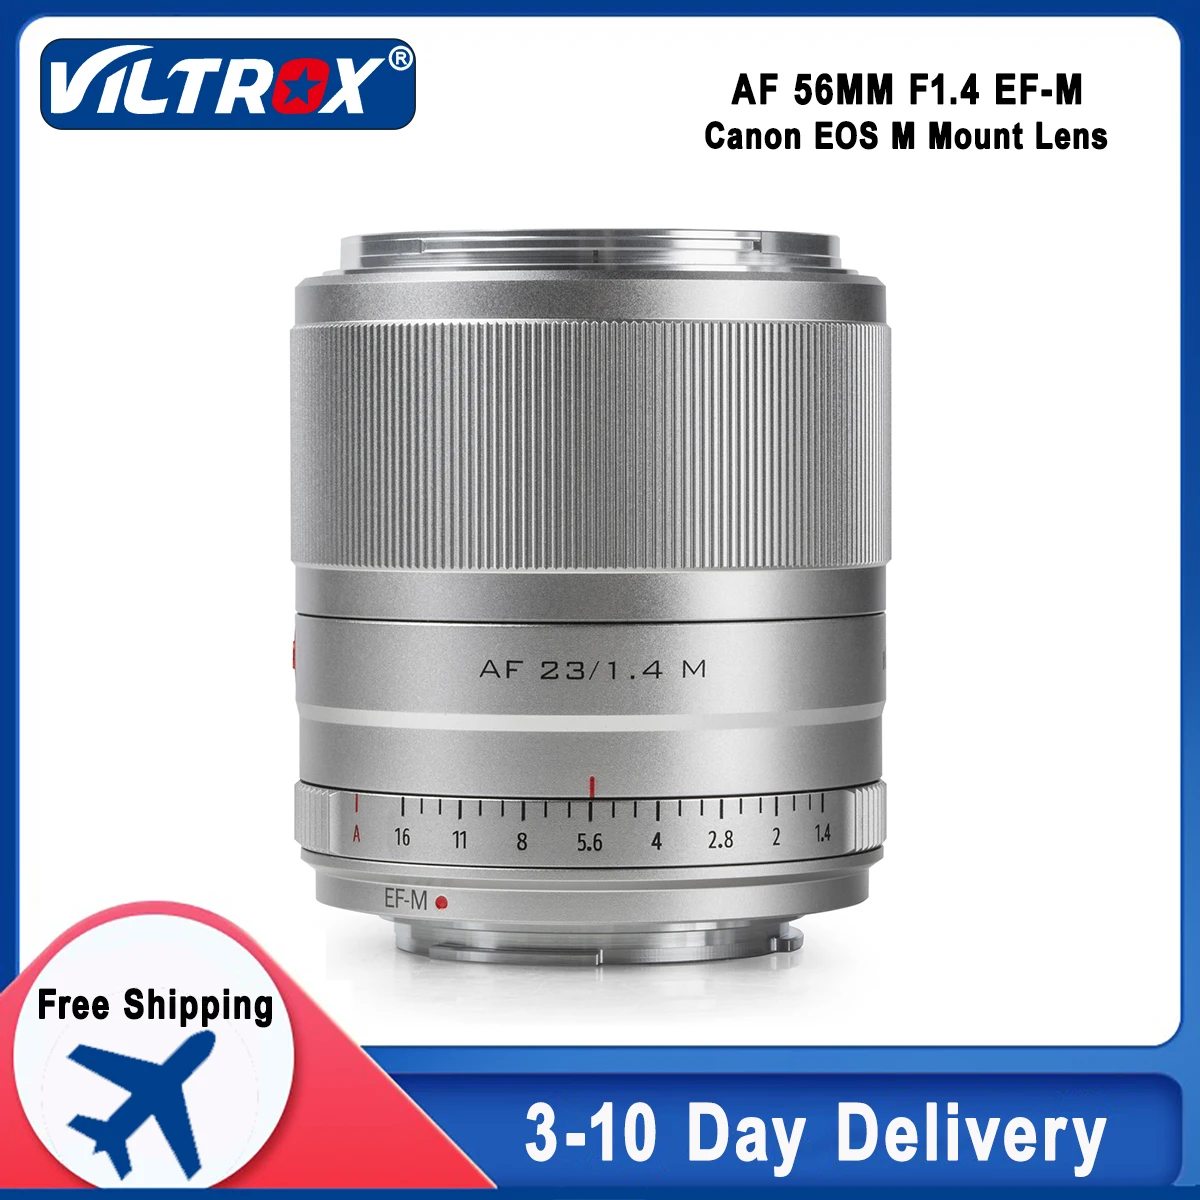 

Viltrox 23mm F1.4 STM Auto Focus APS-C Prime Lens AF EF-M Camera Lenses for Canon EOS M Cameras M3 M5 M6 Mark II M50 M100 M200